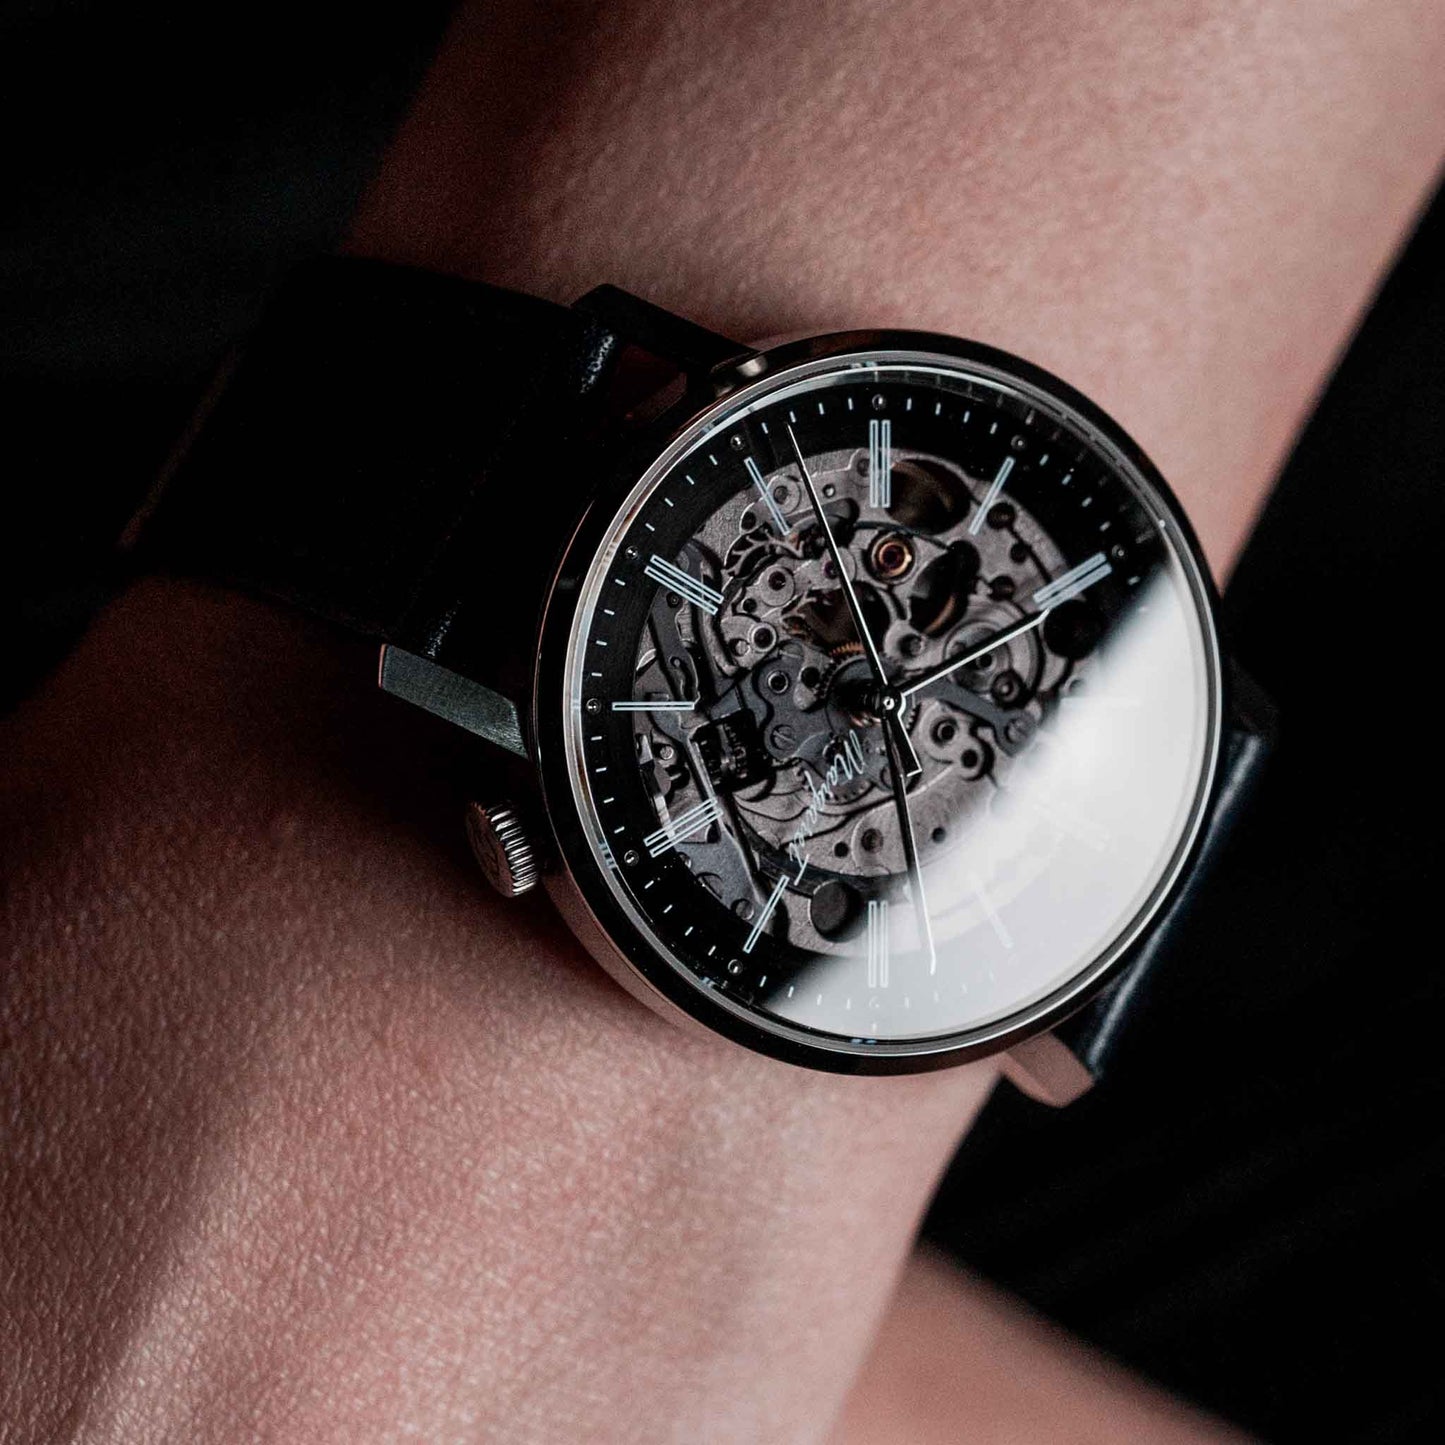 EONIQ custom watch - ALSTER series with sapphire dial - wrist shot